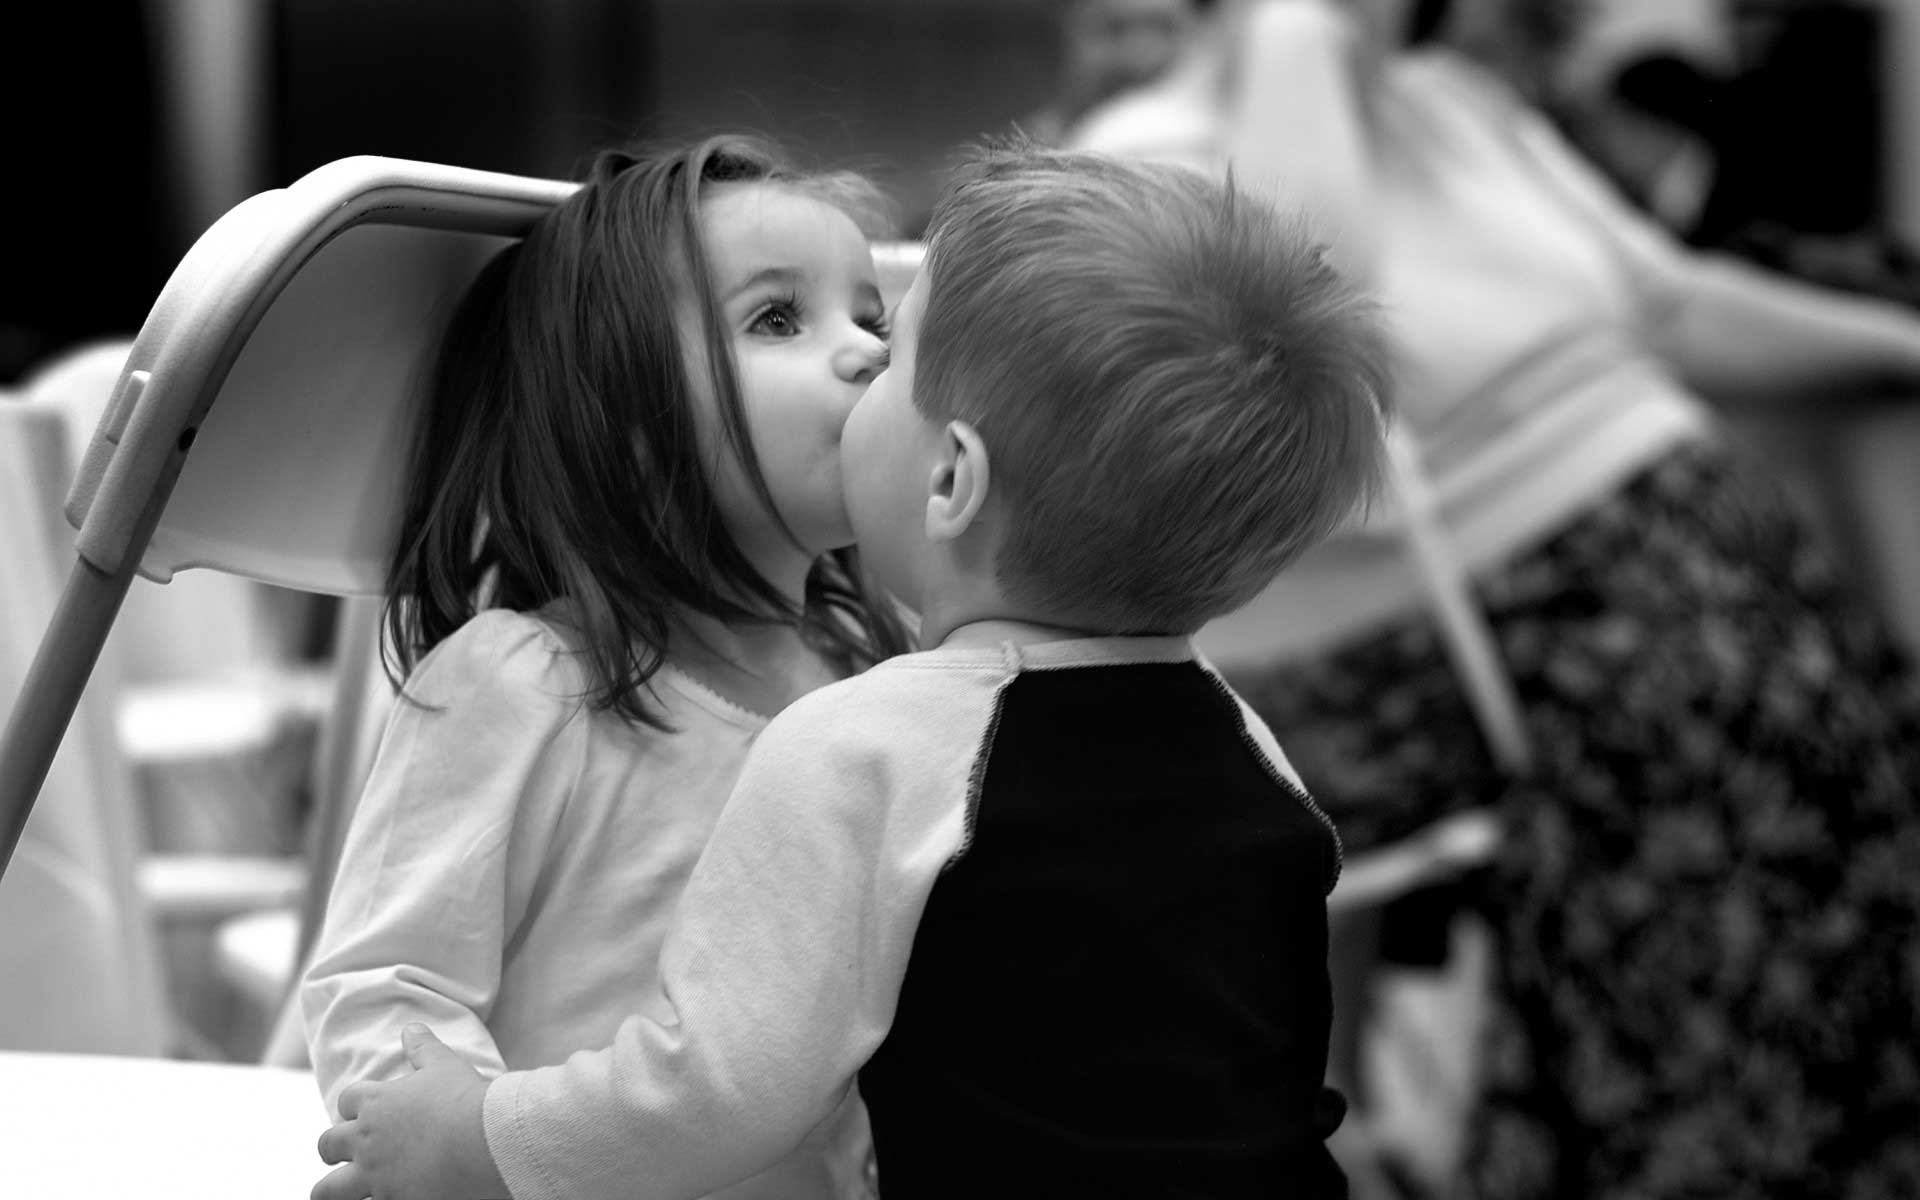 Cutest Children Love kissing image